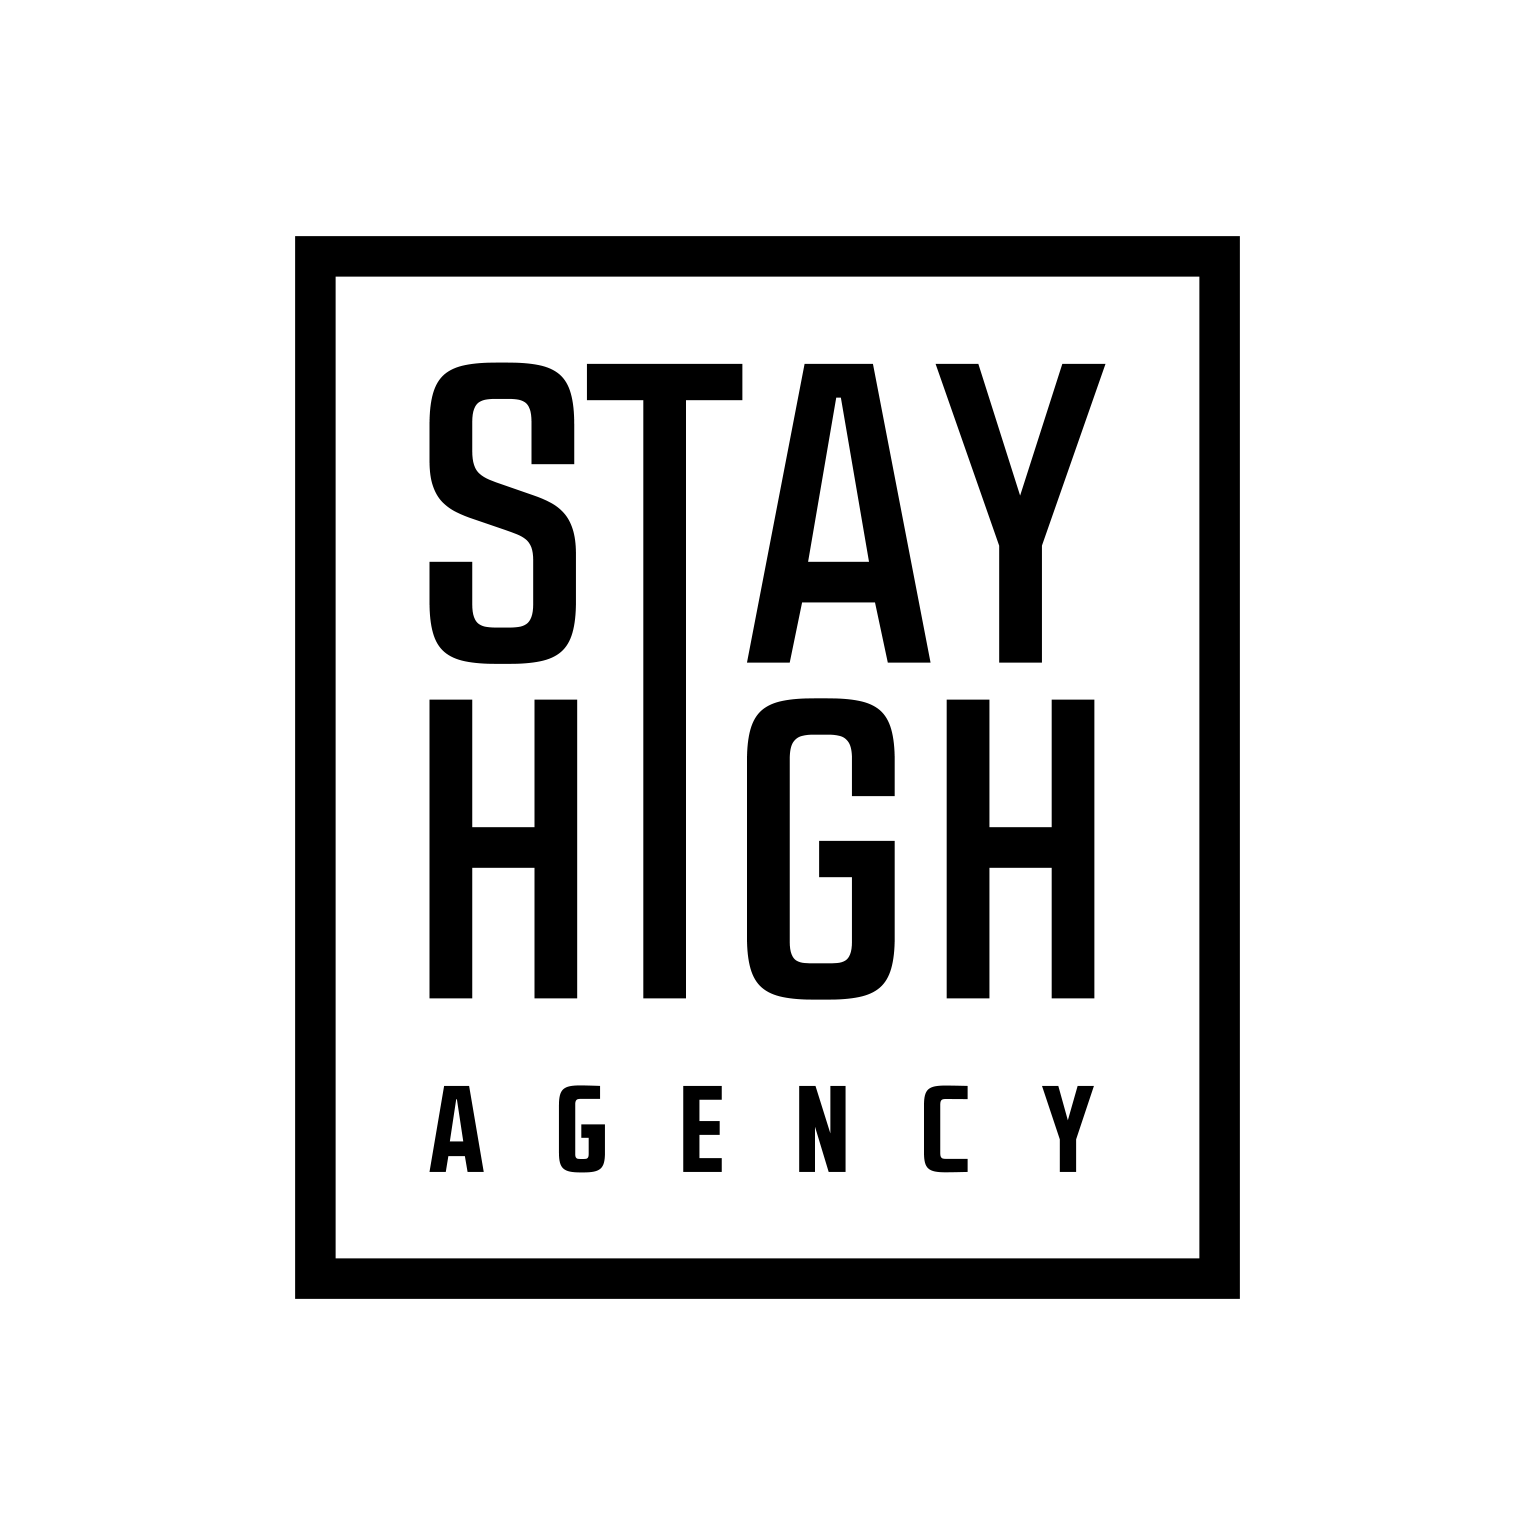 Logotyp agencji Stay High